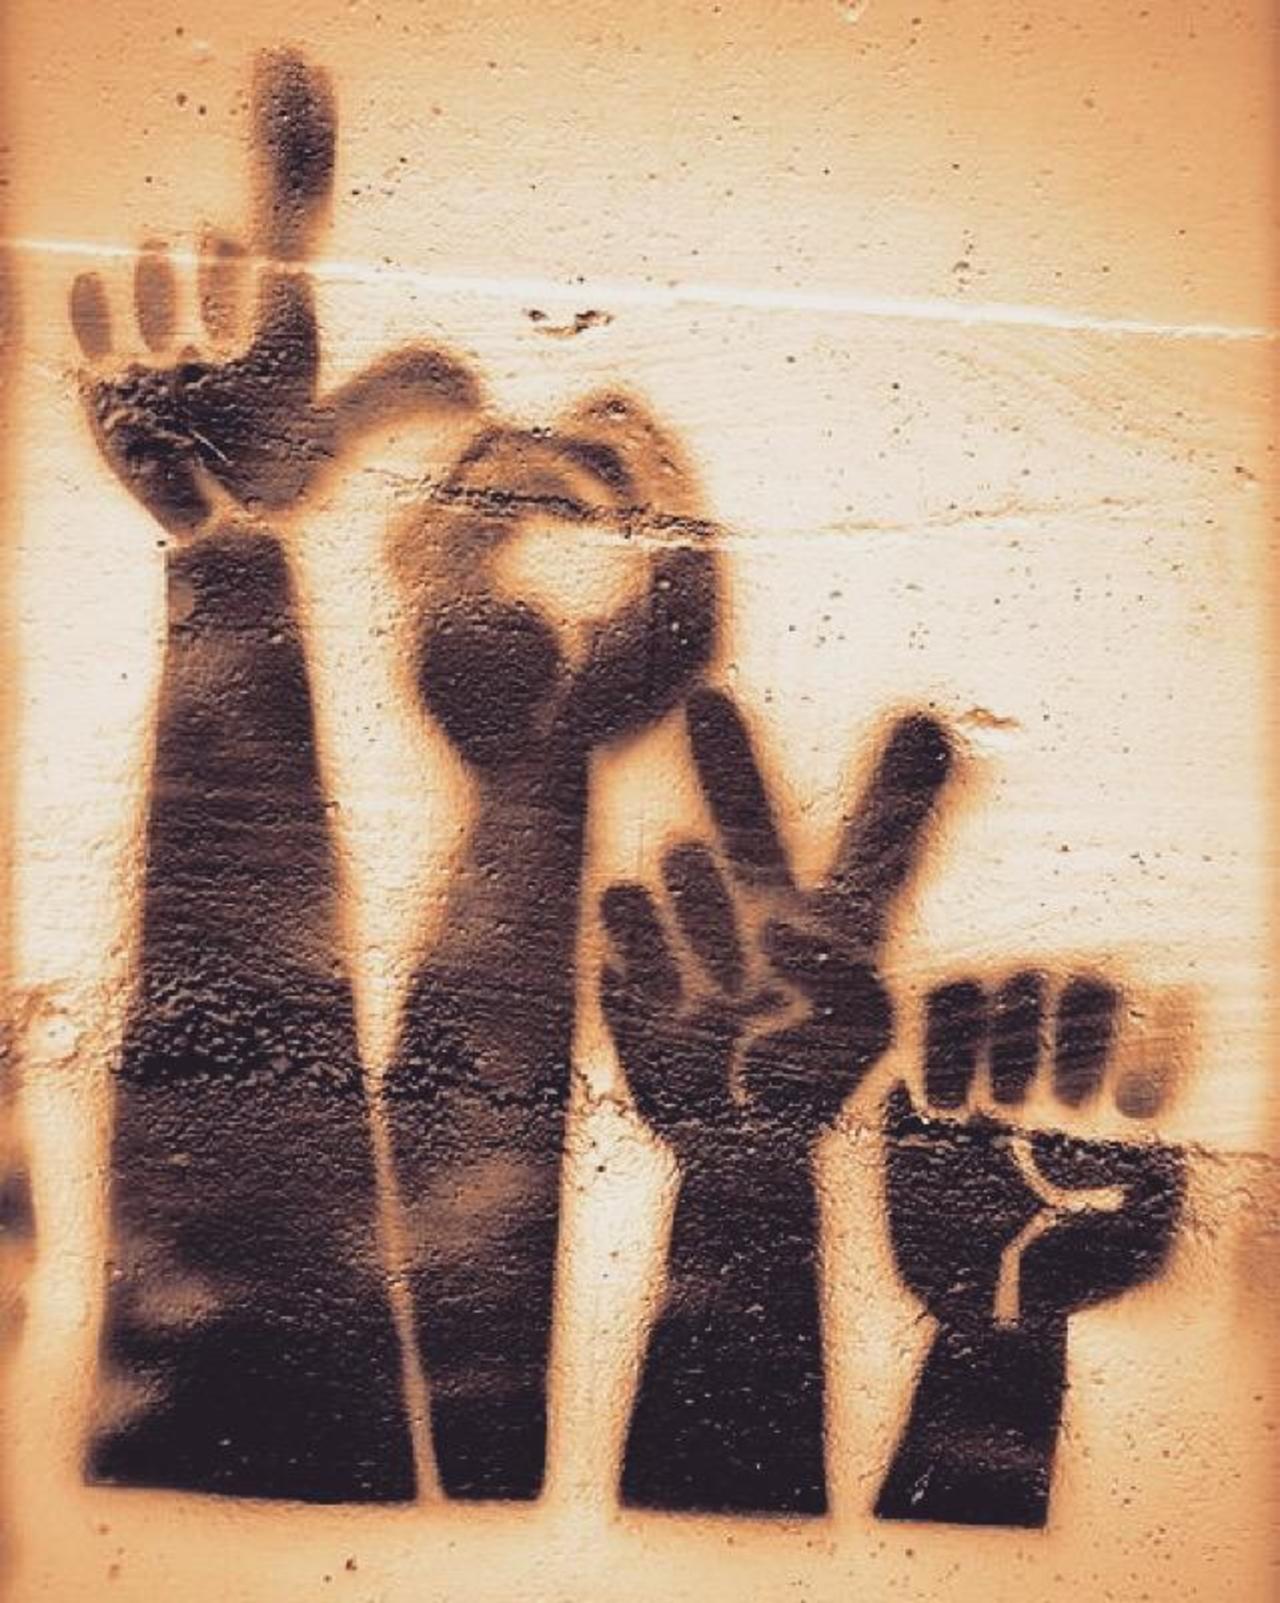 L-O-V-E  #streetart #graffiti #simbimoment #simbihaiti #signlanguage #love #bethedifference  http://t.co/1LcLOm3OH2